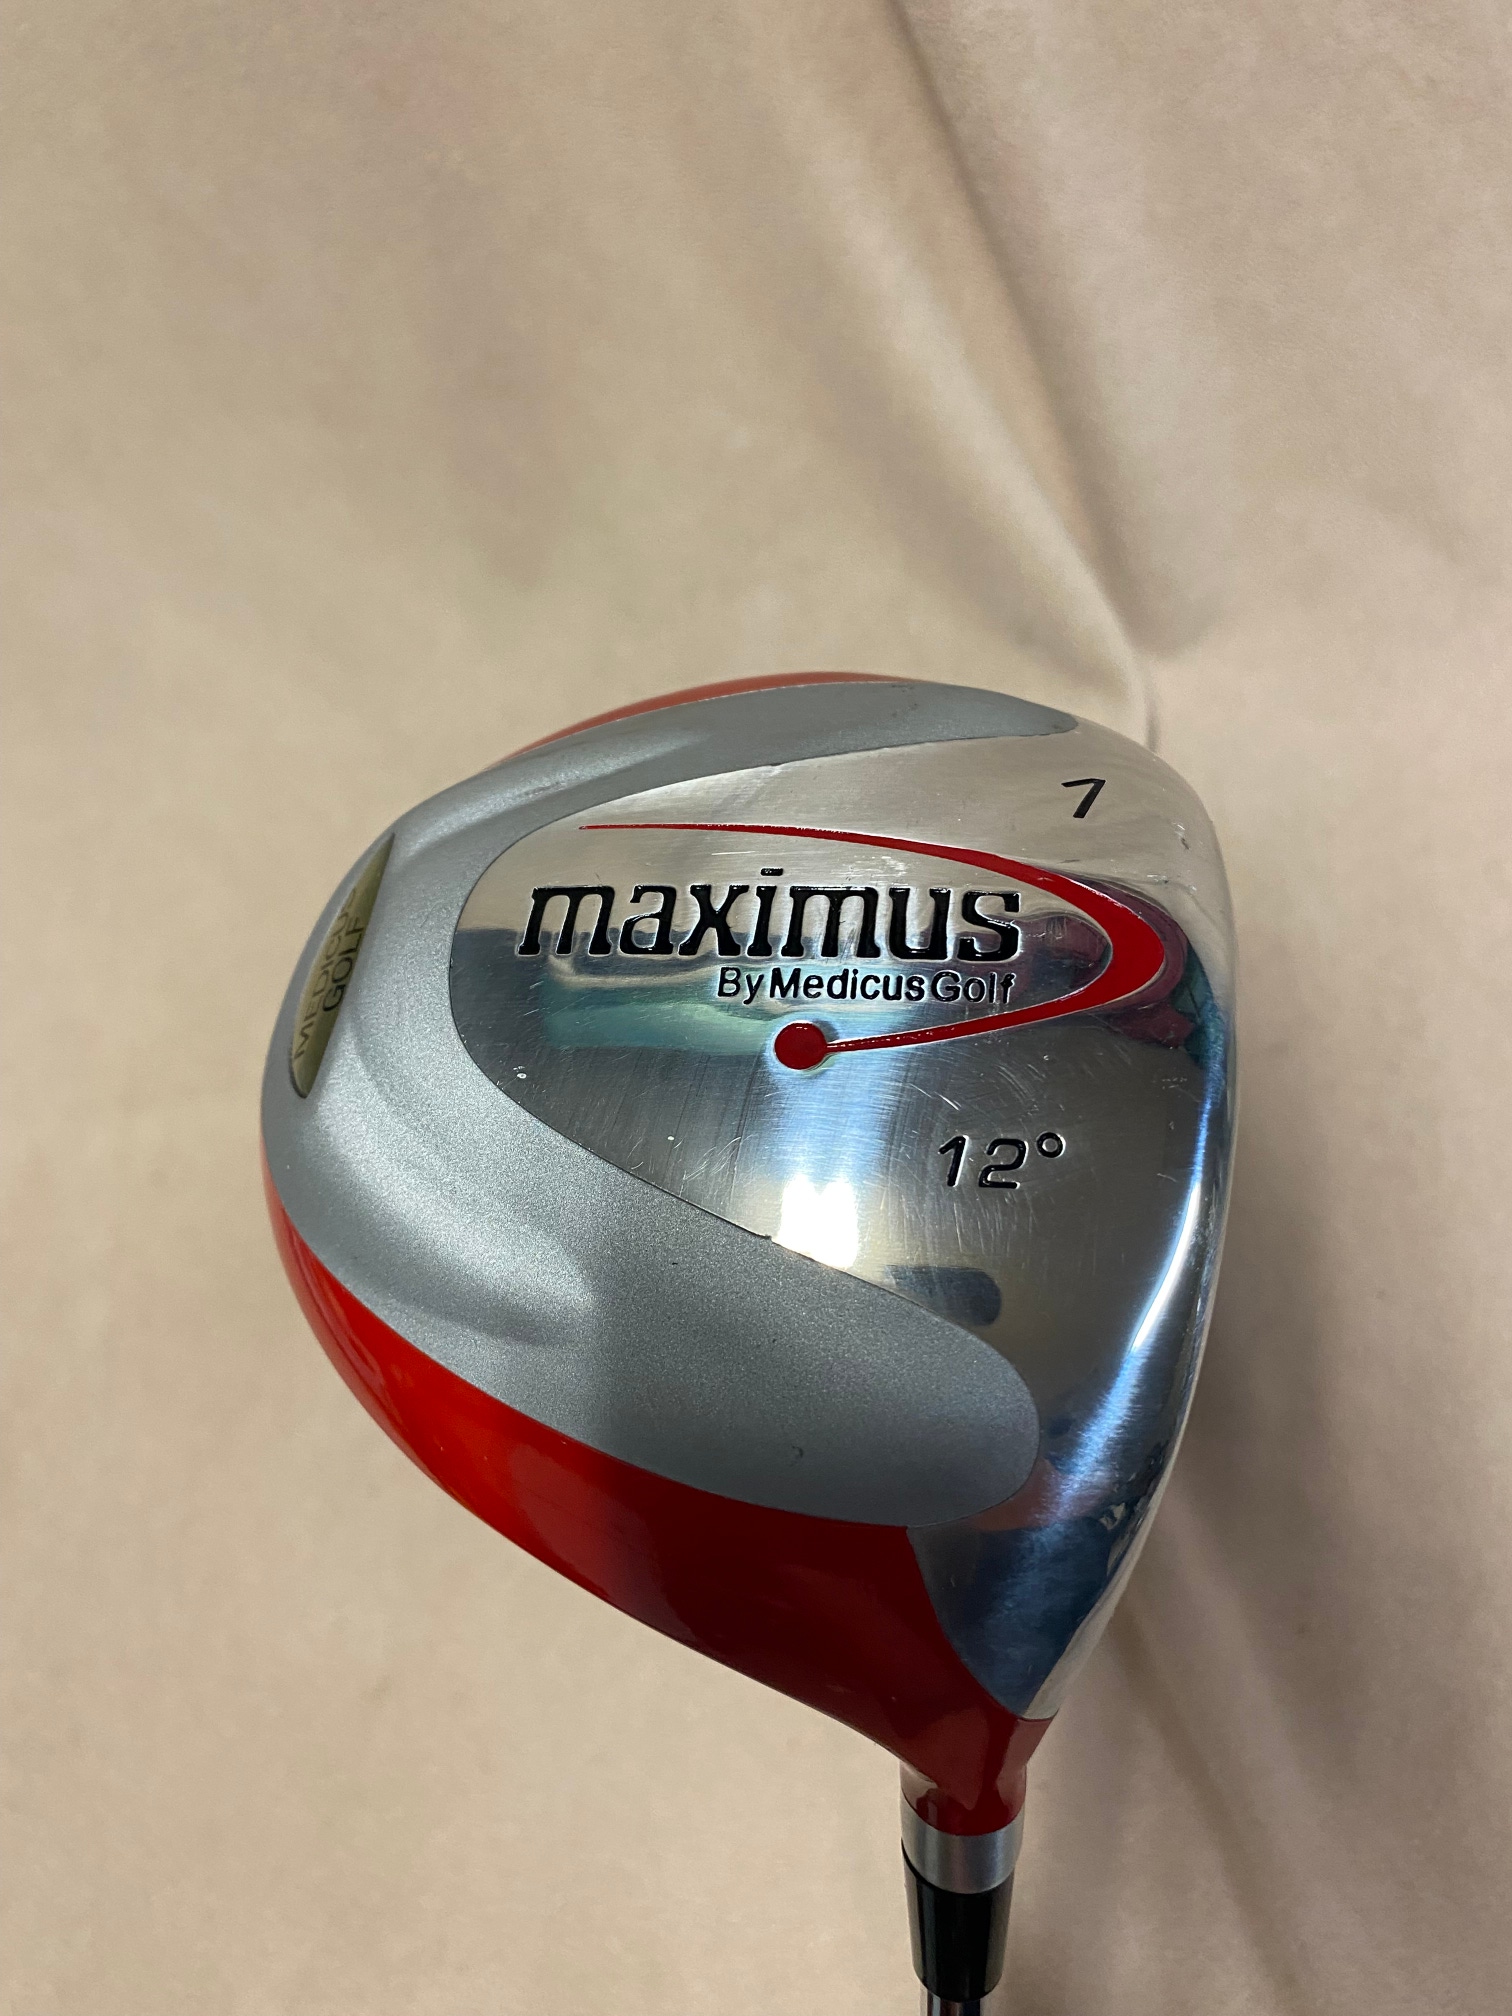 Men's Used Medicus Golf Maximus Driver right handed Uniflex 12 Loft